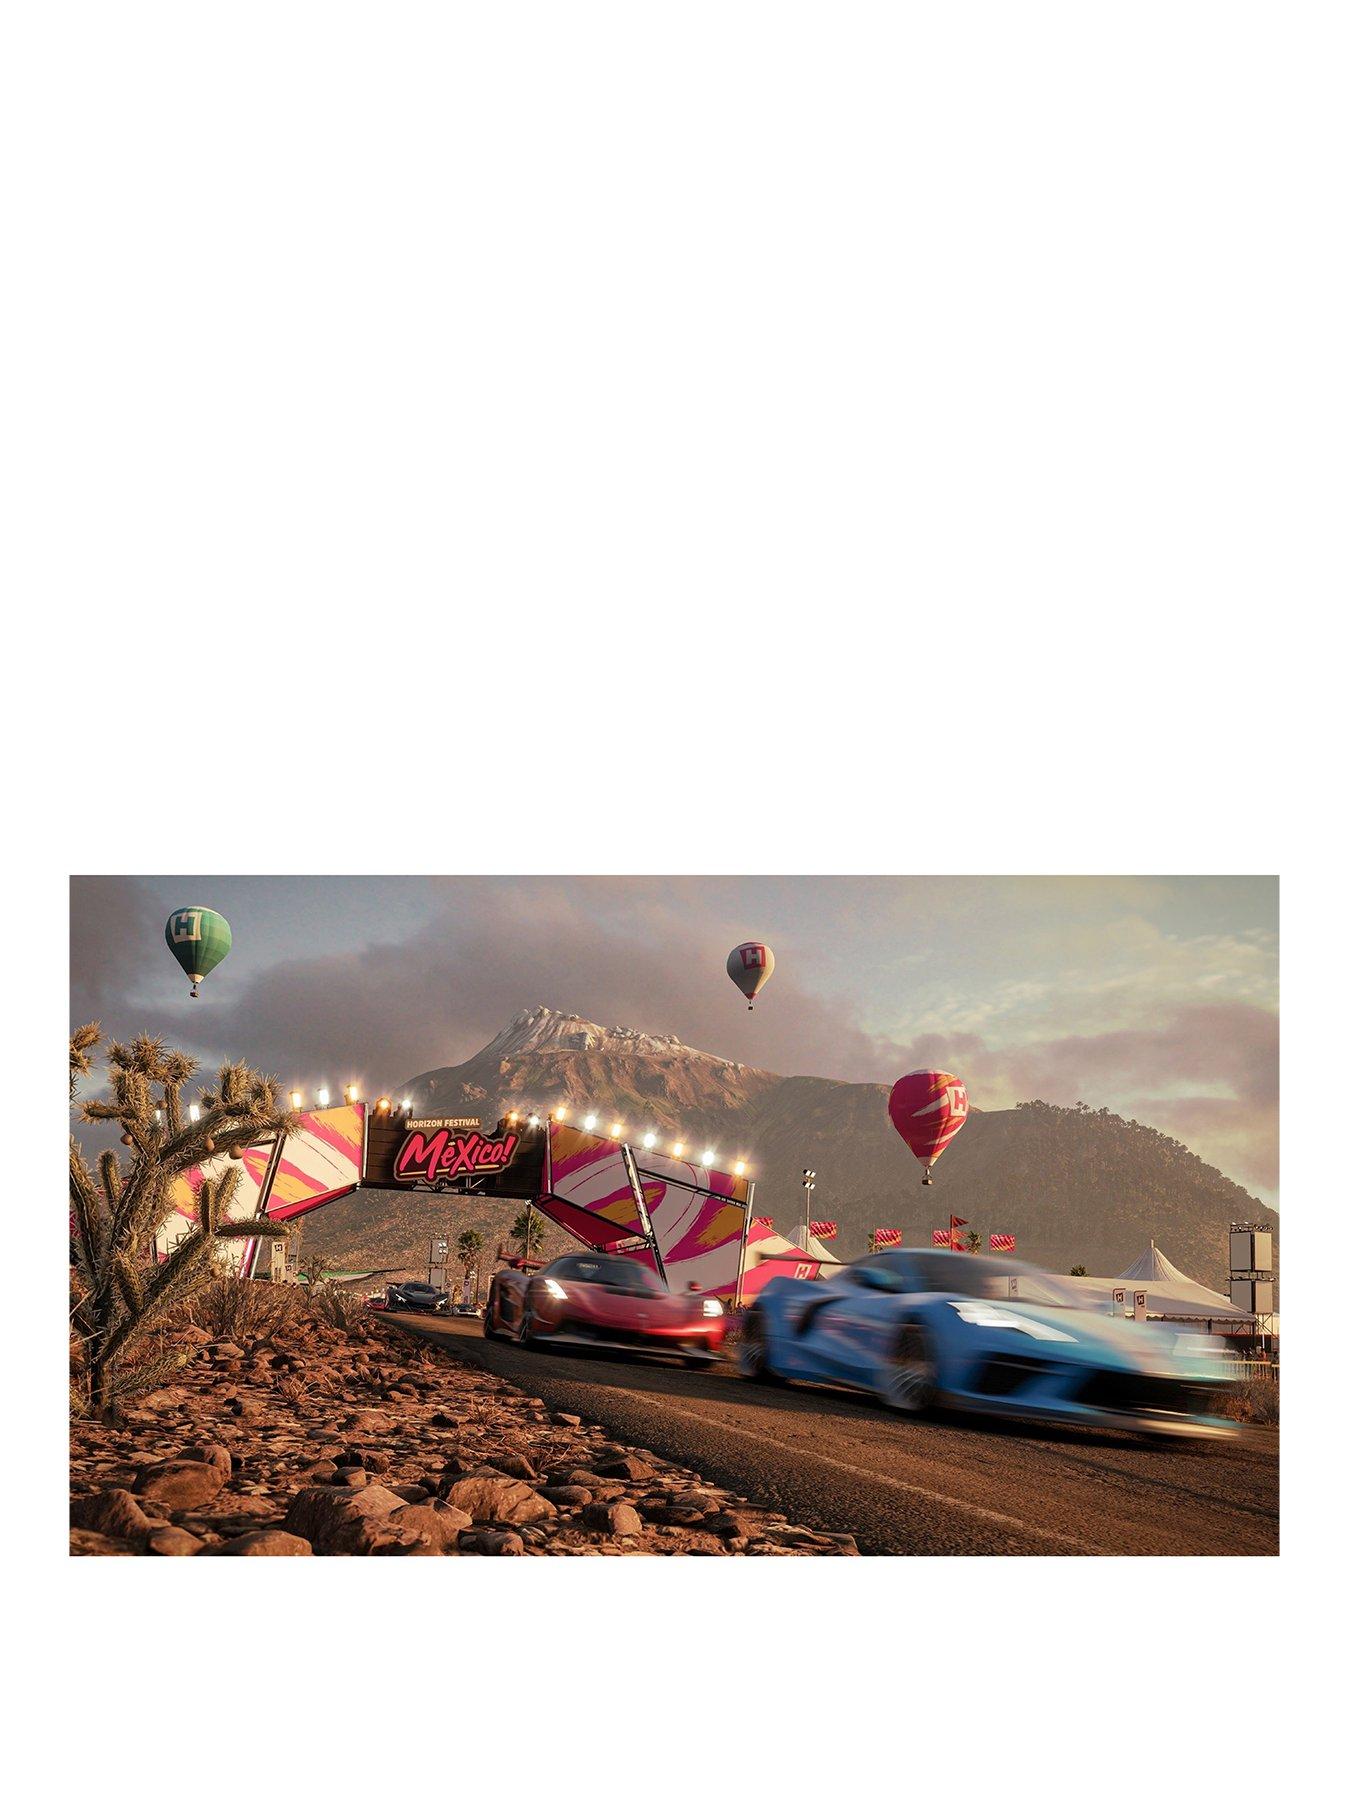 Xbox Forza Horizon 5: Deluxe Edition - Digital Download